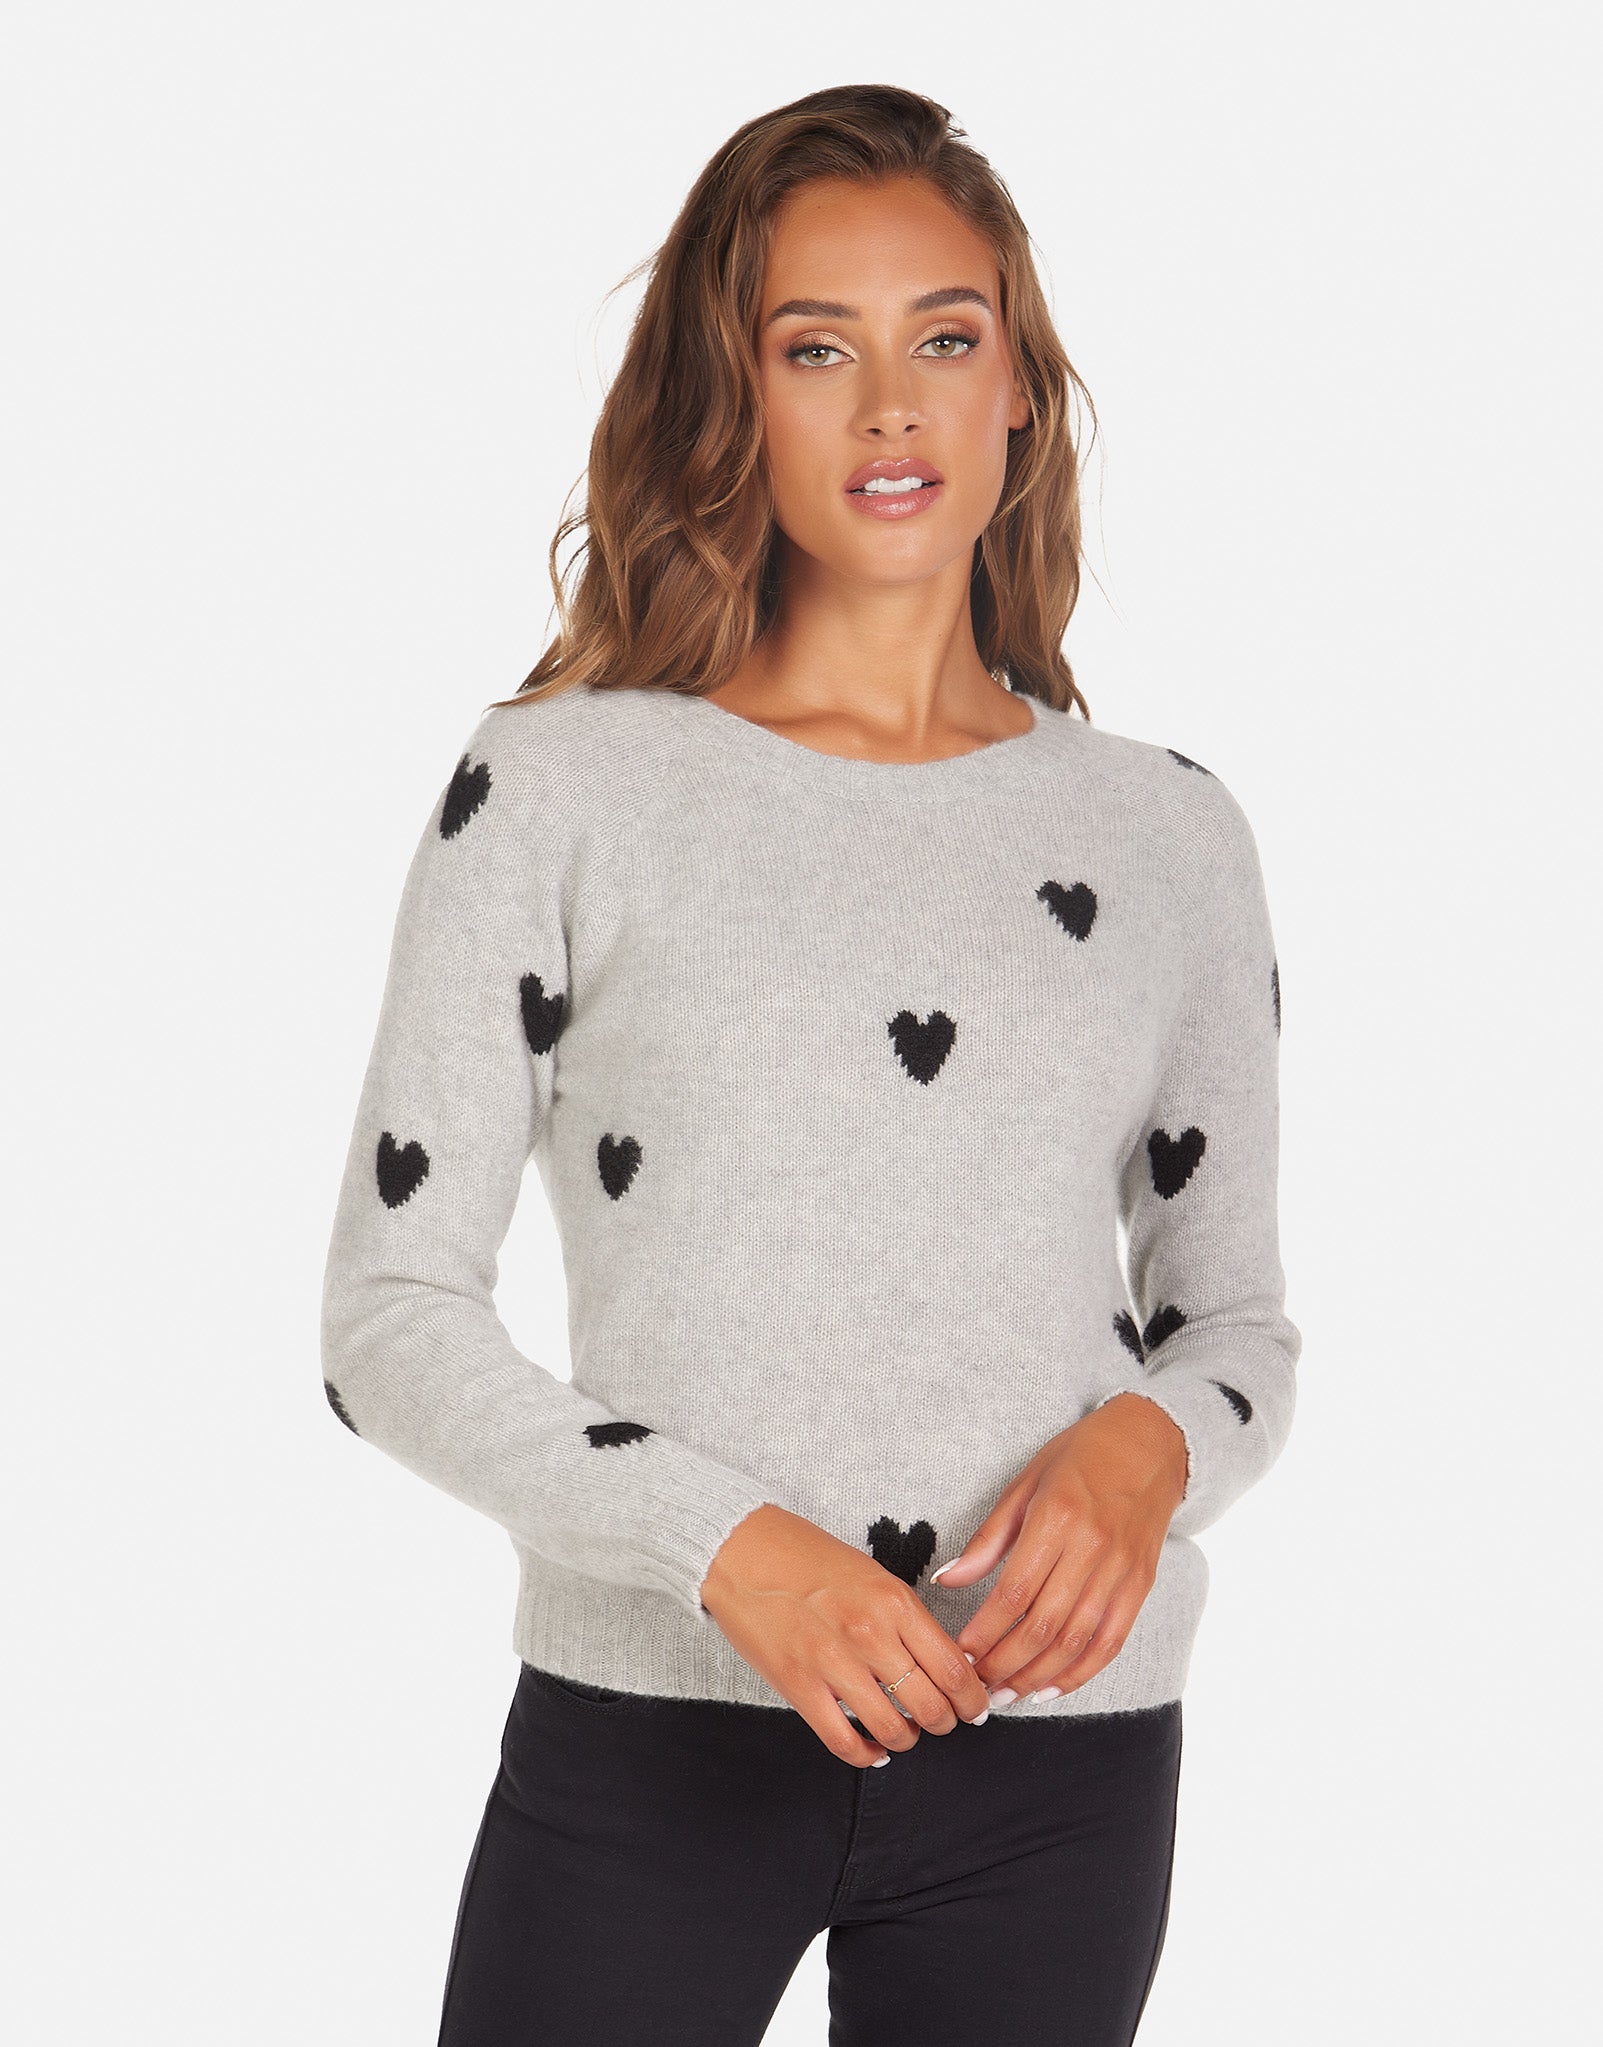 Godric Cashmere Heart Sweater - Heather Grey/Black L